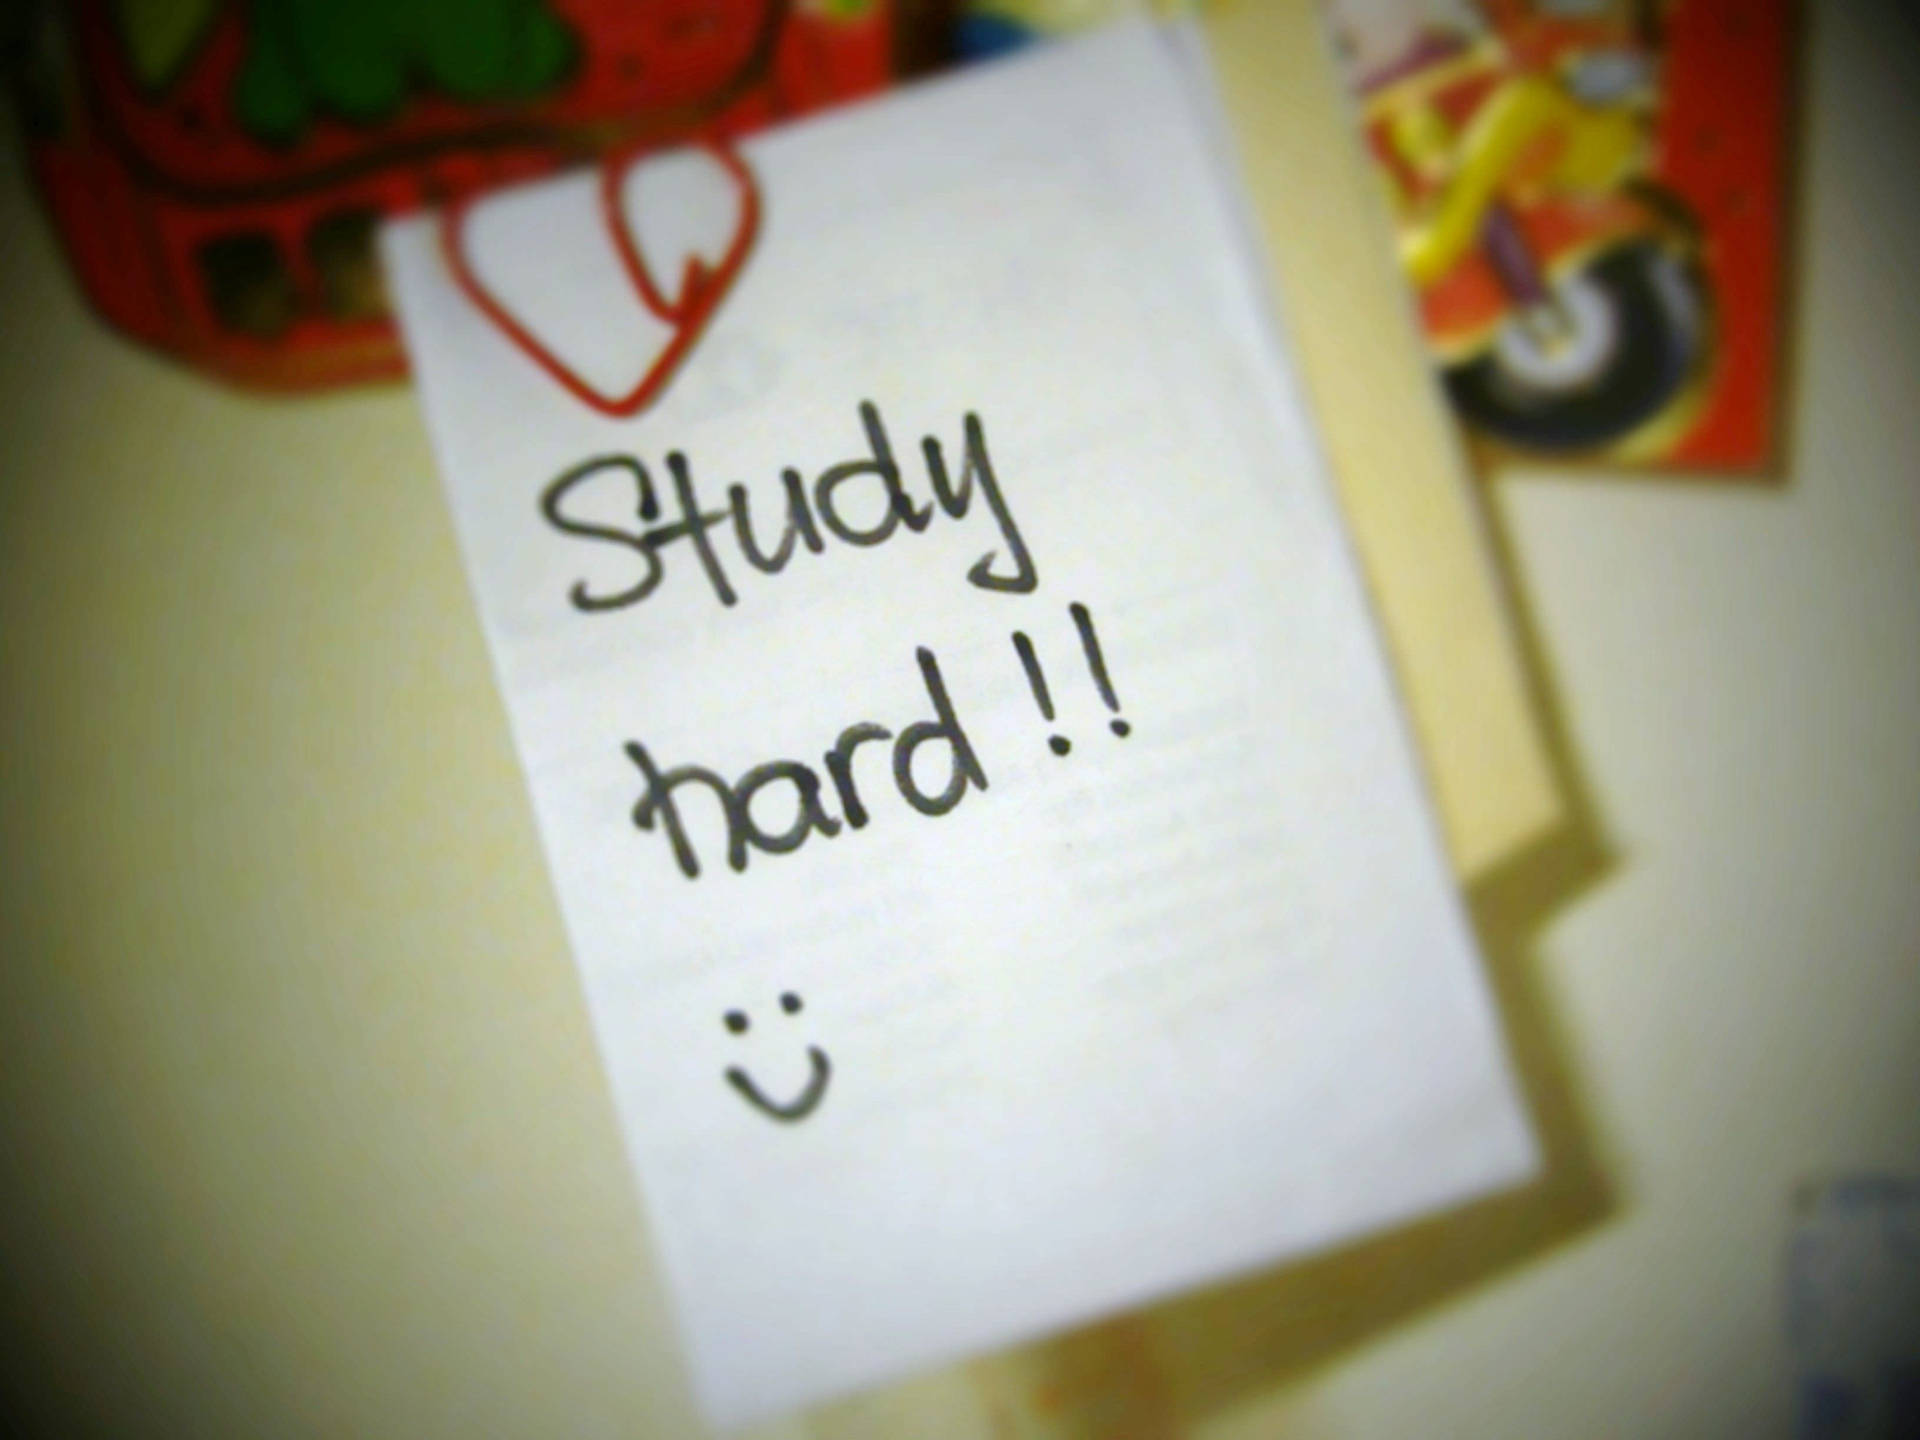 Motivational Study Hard Quote